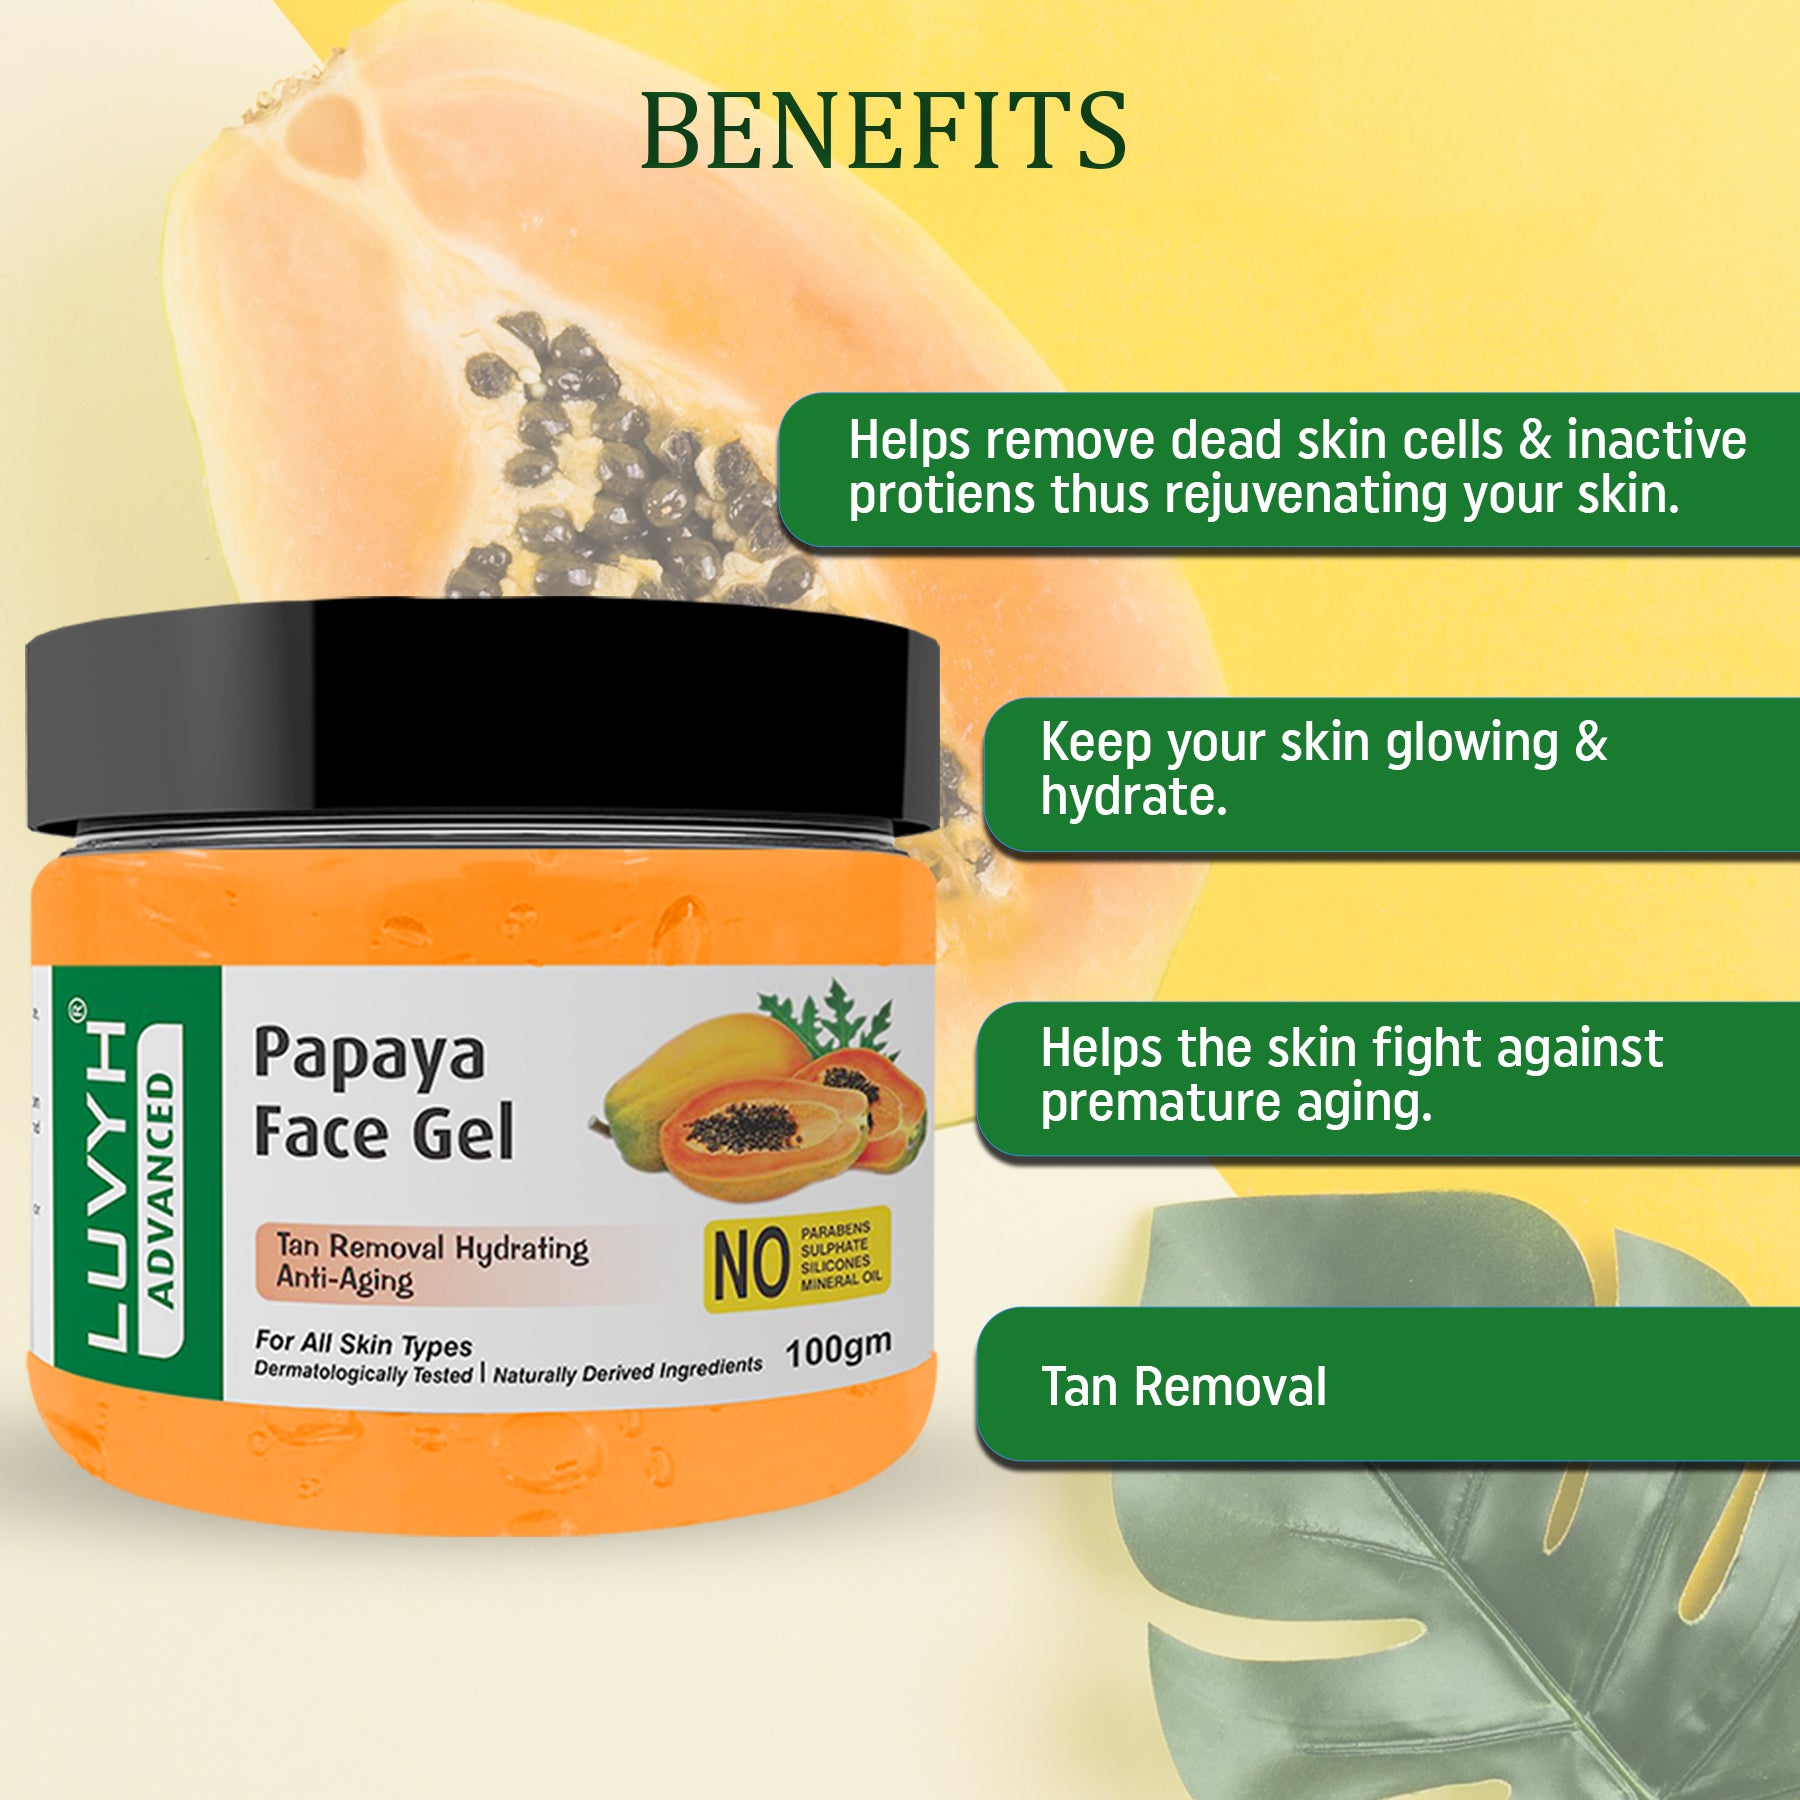 Benefits of Papaya Face Gel